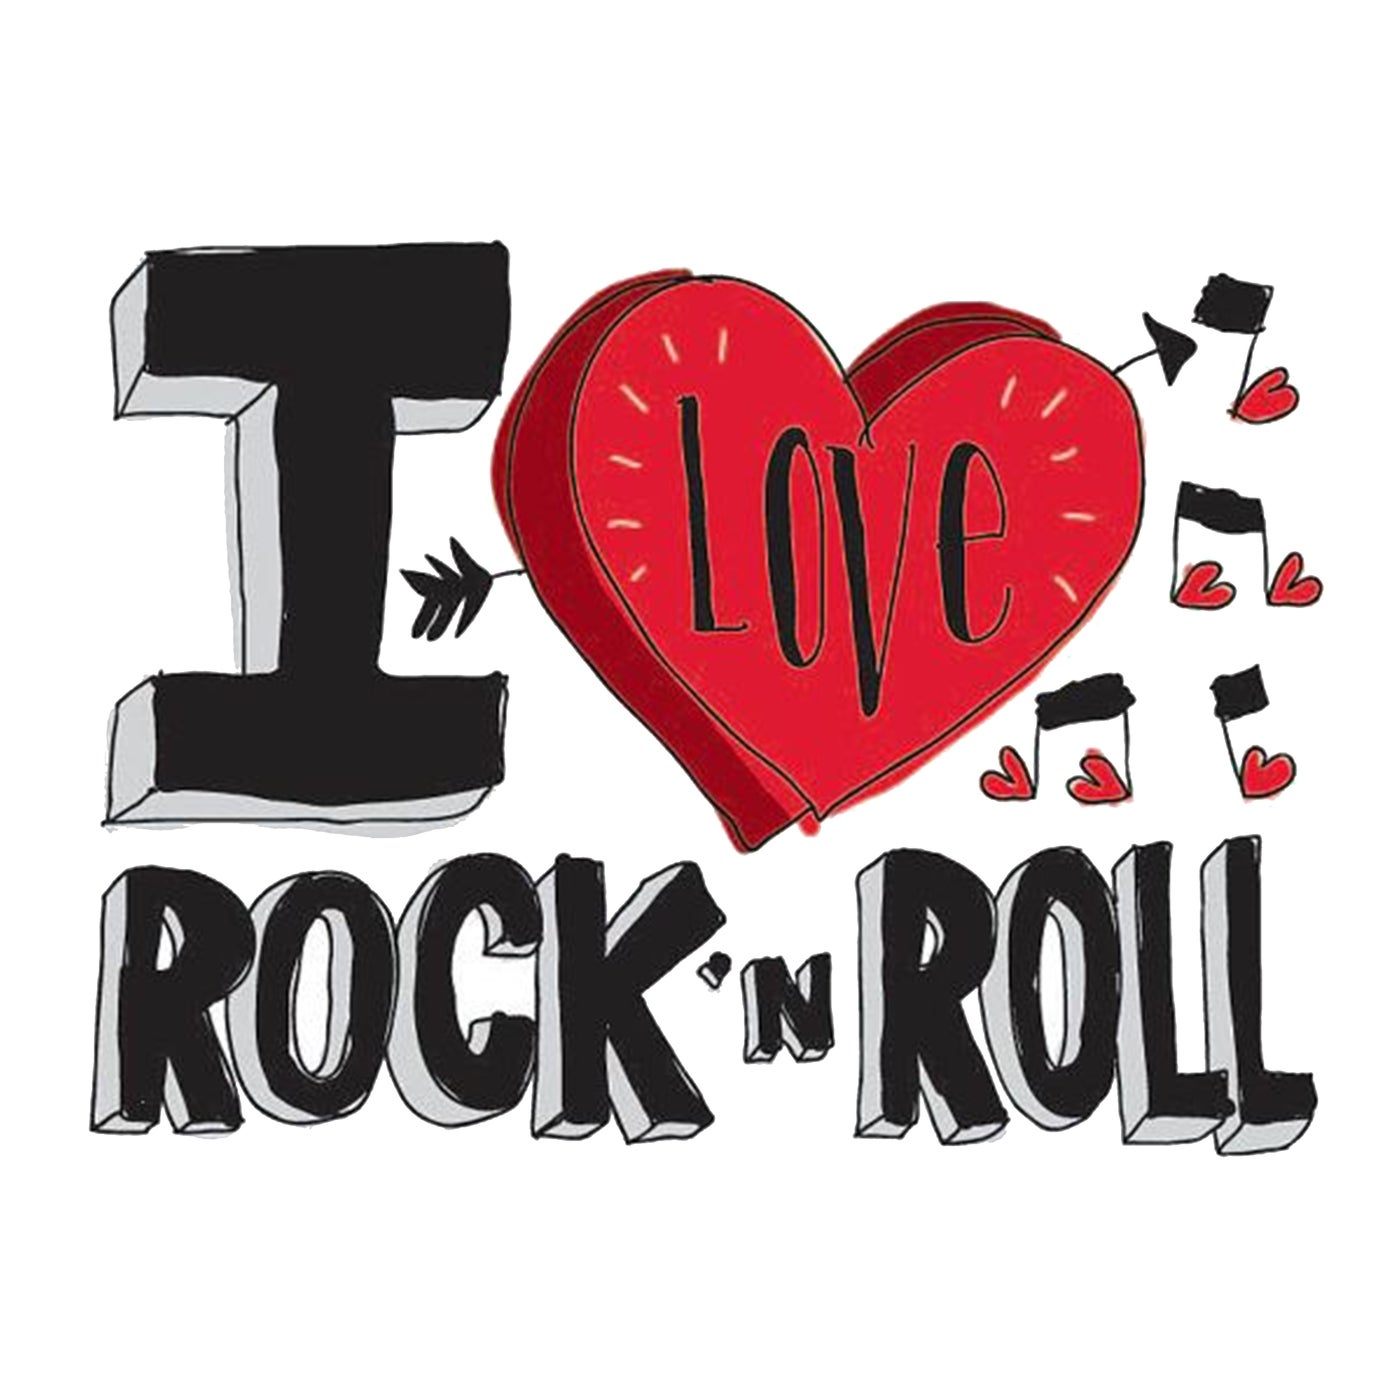 I rock n roll. Рок-н-ролл. Я люблю рок-н-ролл. Рок н ролл картинки. Ай лов рок н ролл.